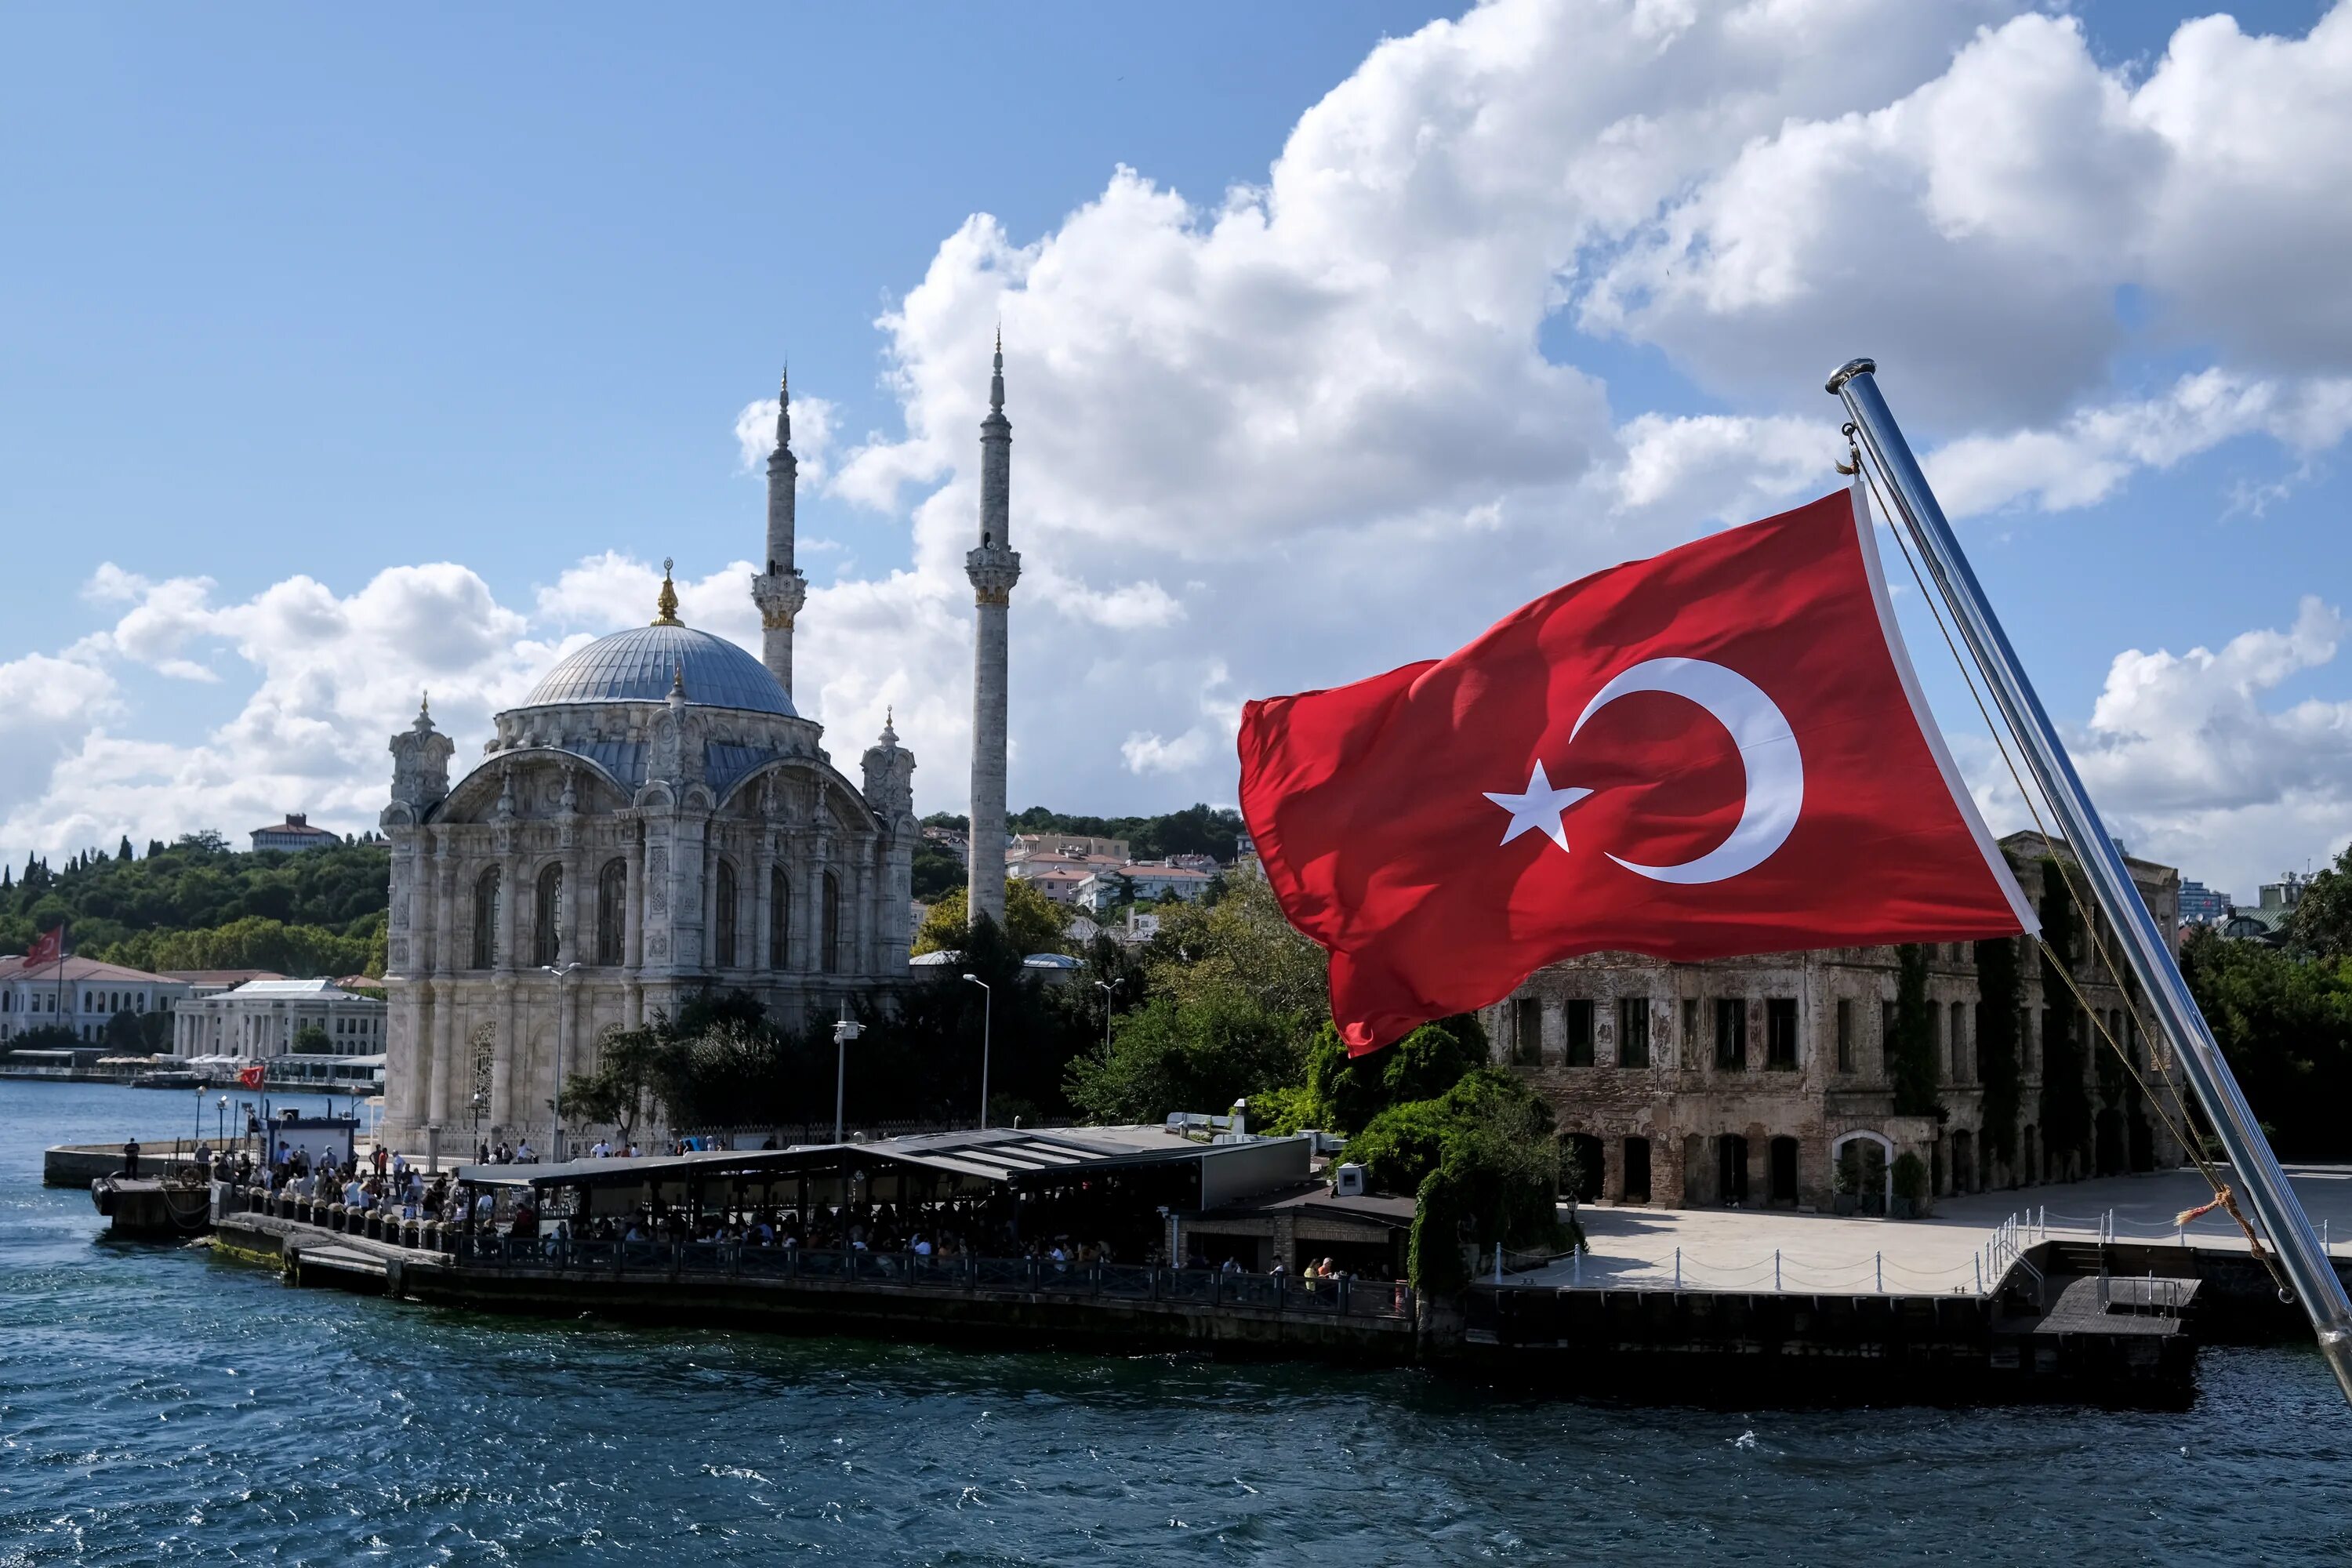 Turkey турция. Турция Истанбул. Турция Султанахмет флаг. Туркия Истамбул. Турецкий флаг Стамбул.